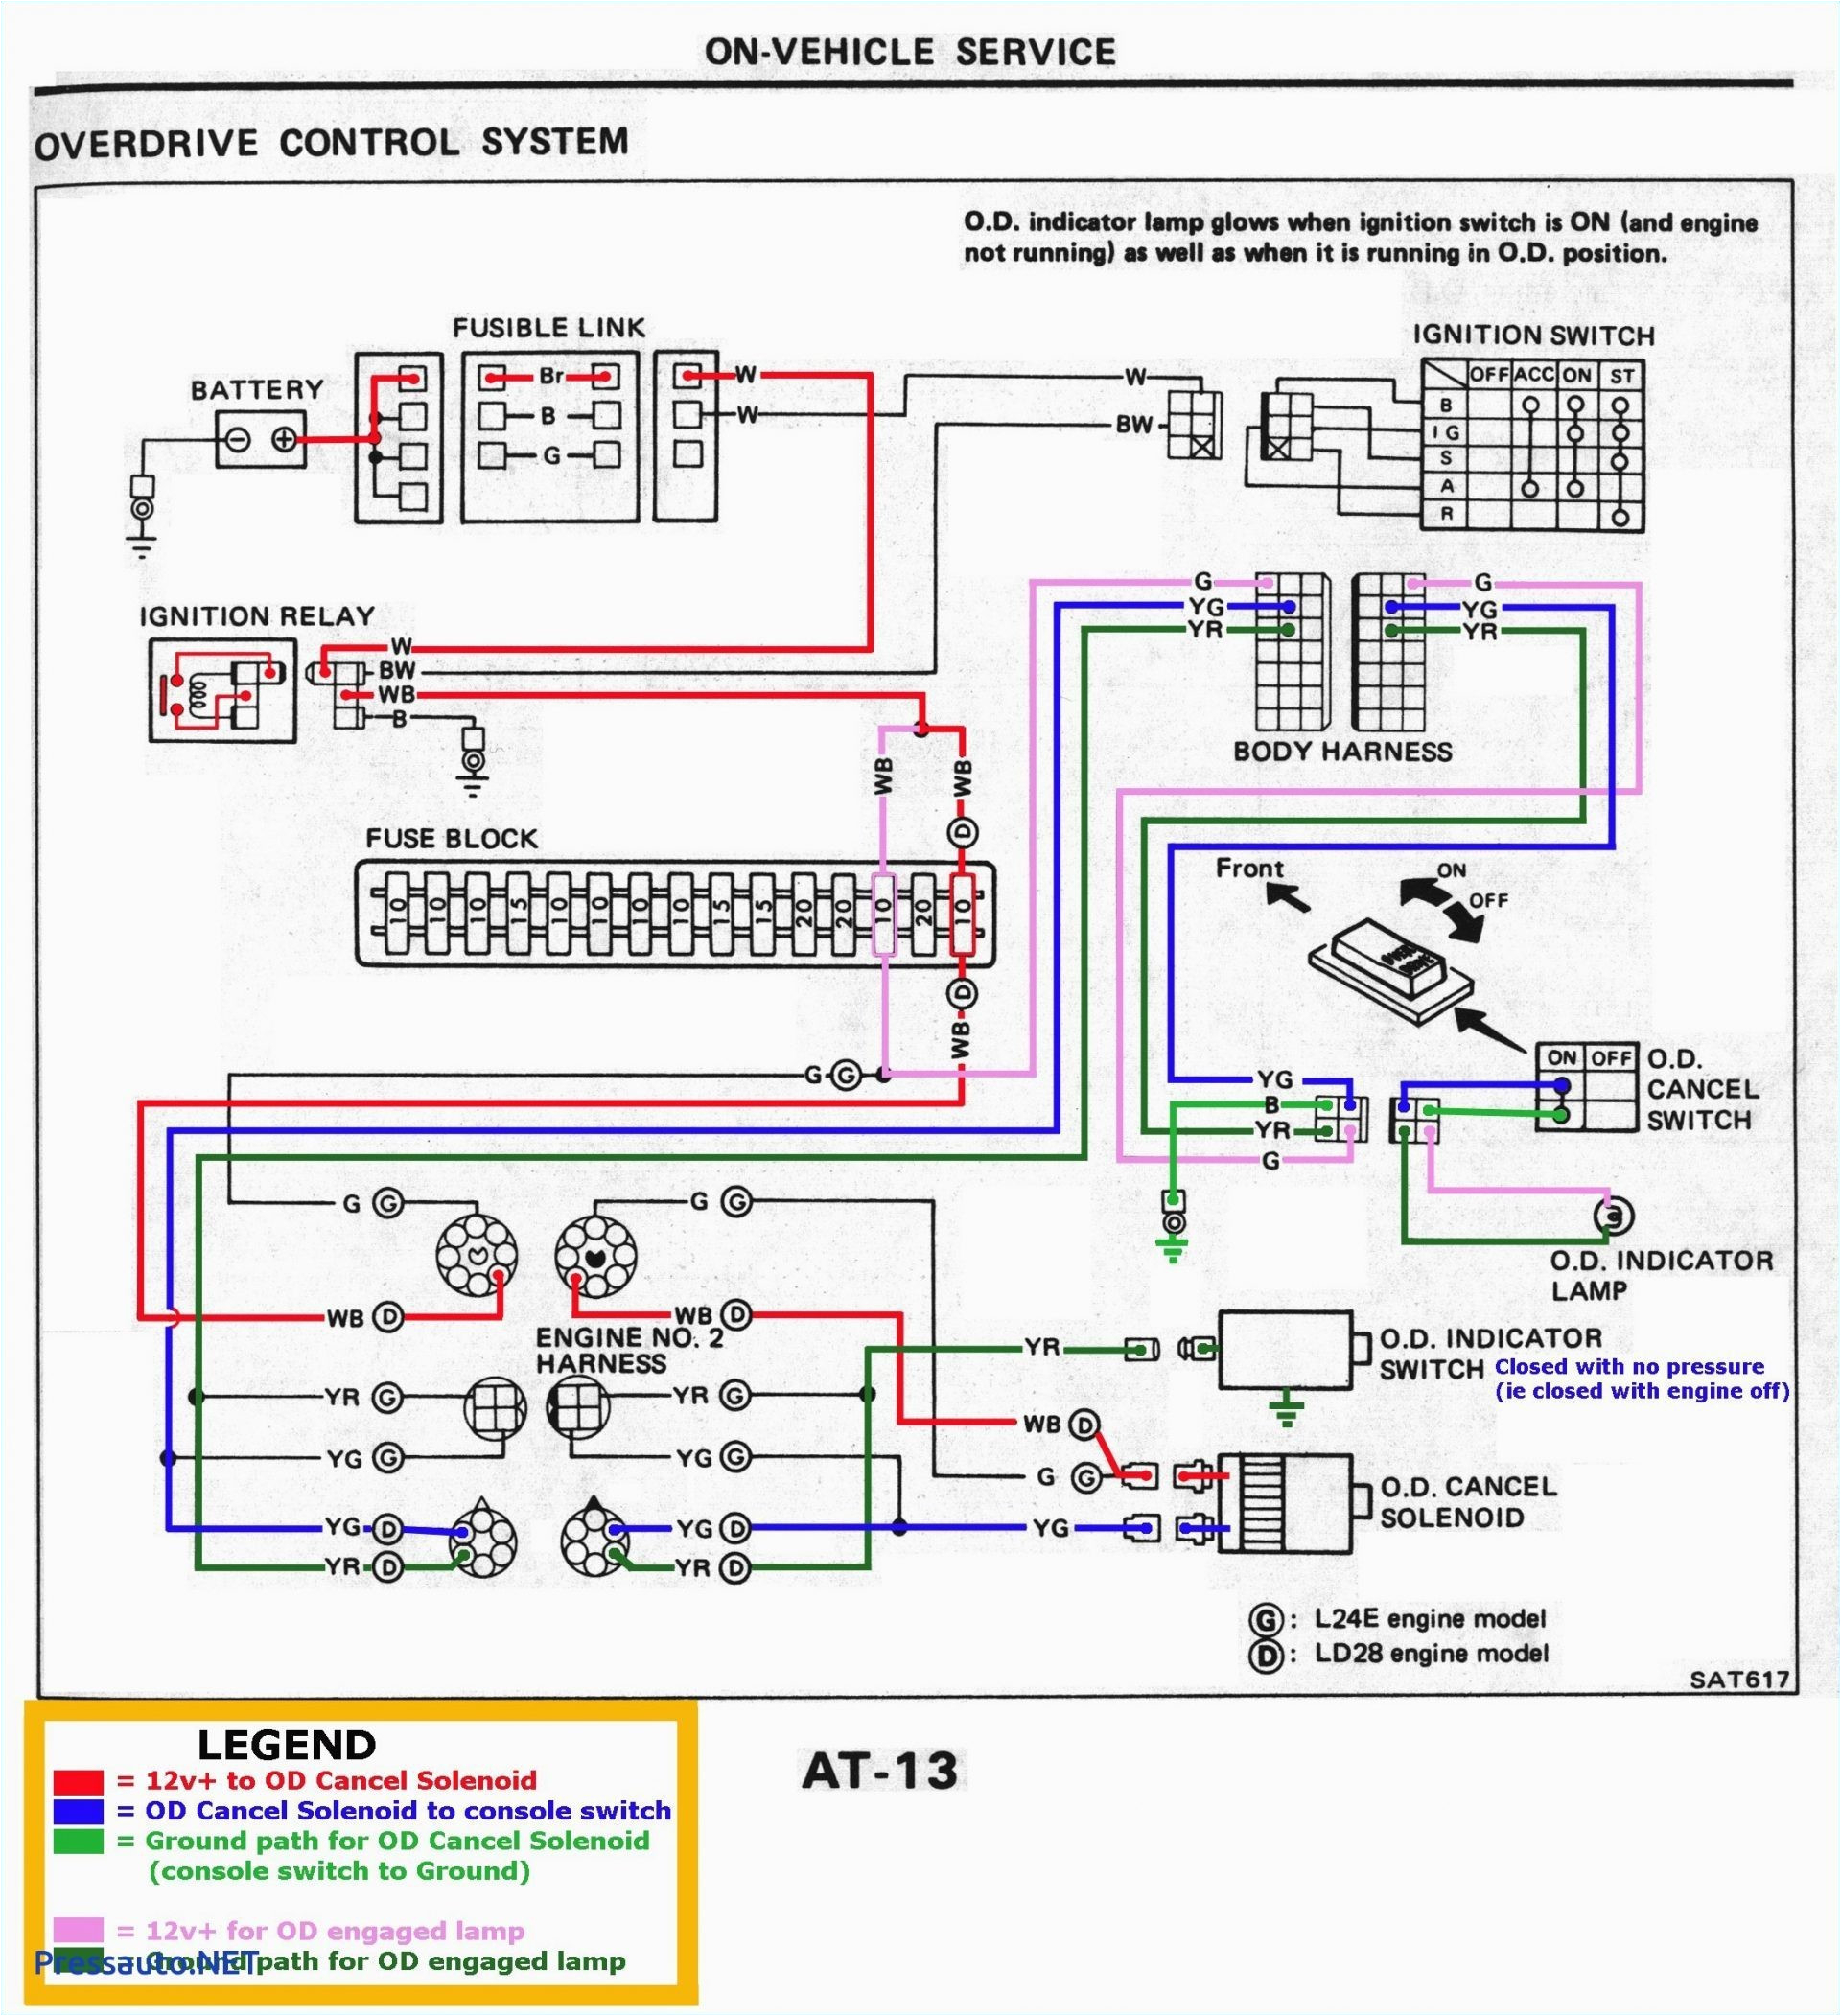 automotive wiring diagram color codes wiring diagram color codes automotive best car lamp wiring diagram best wiring diagram for remote car 7i jpg